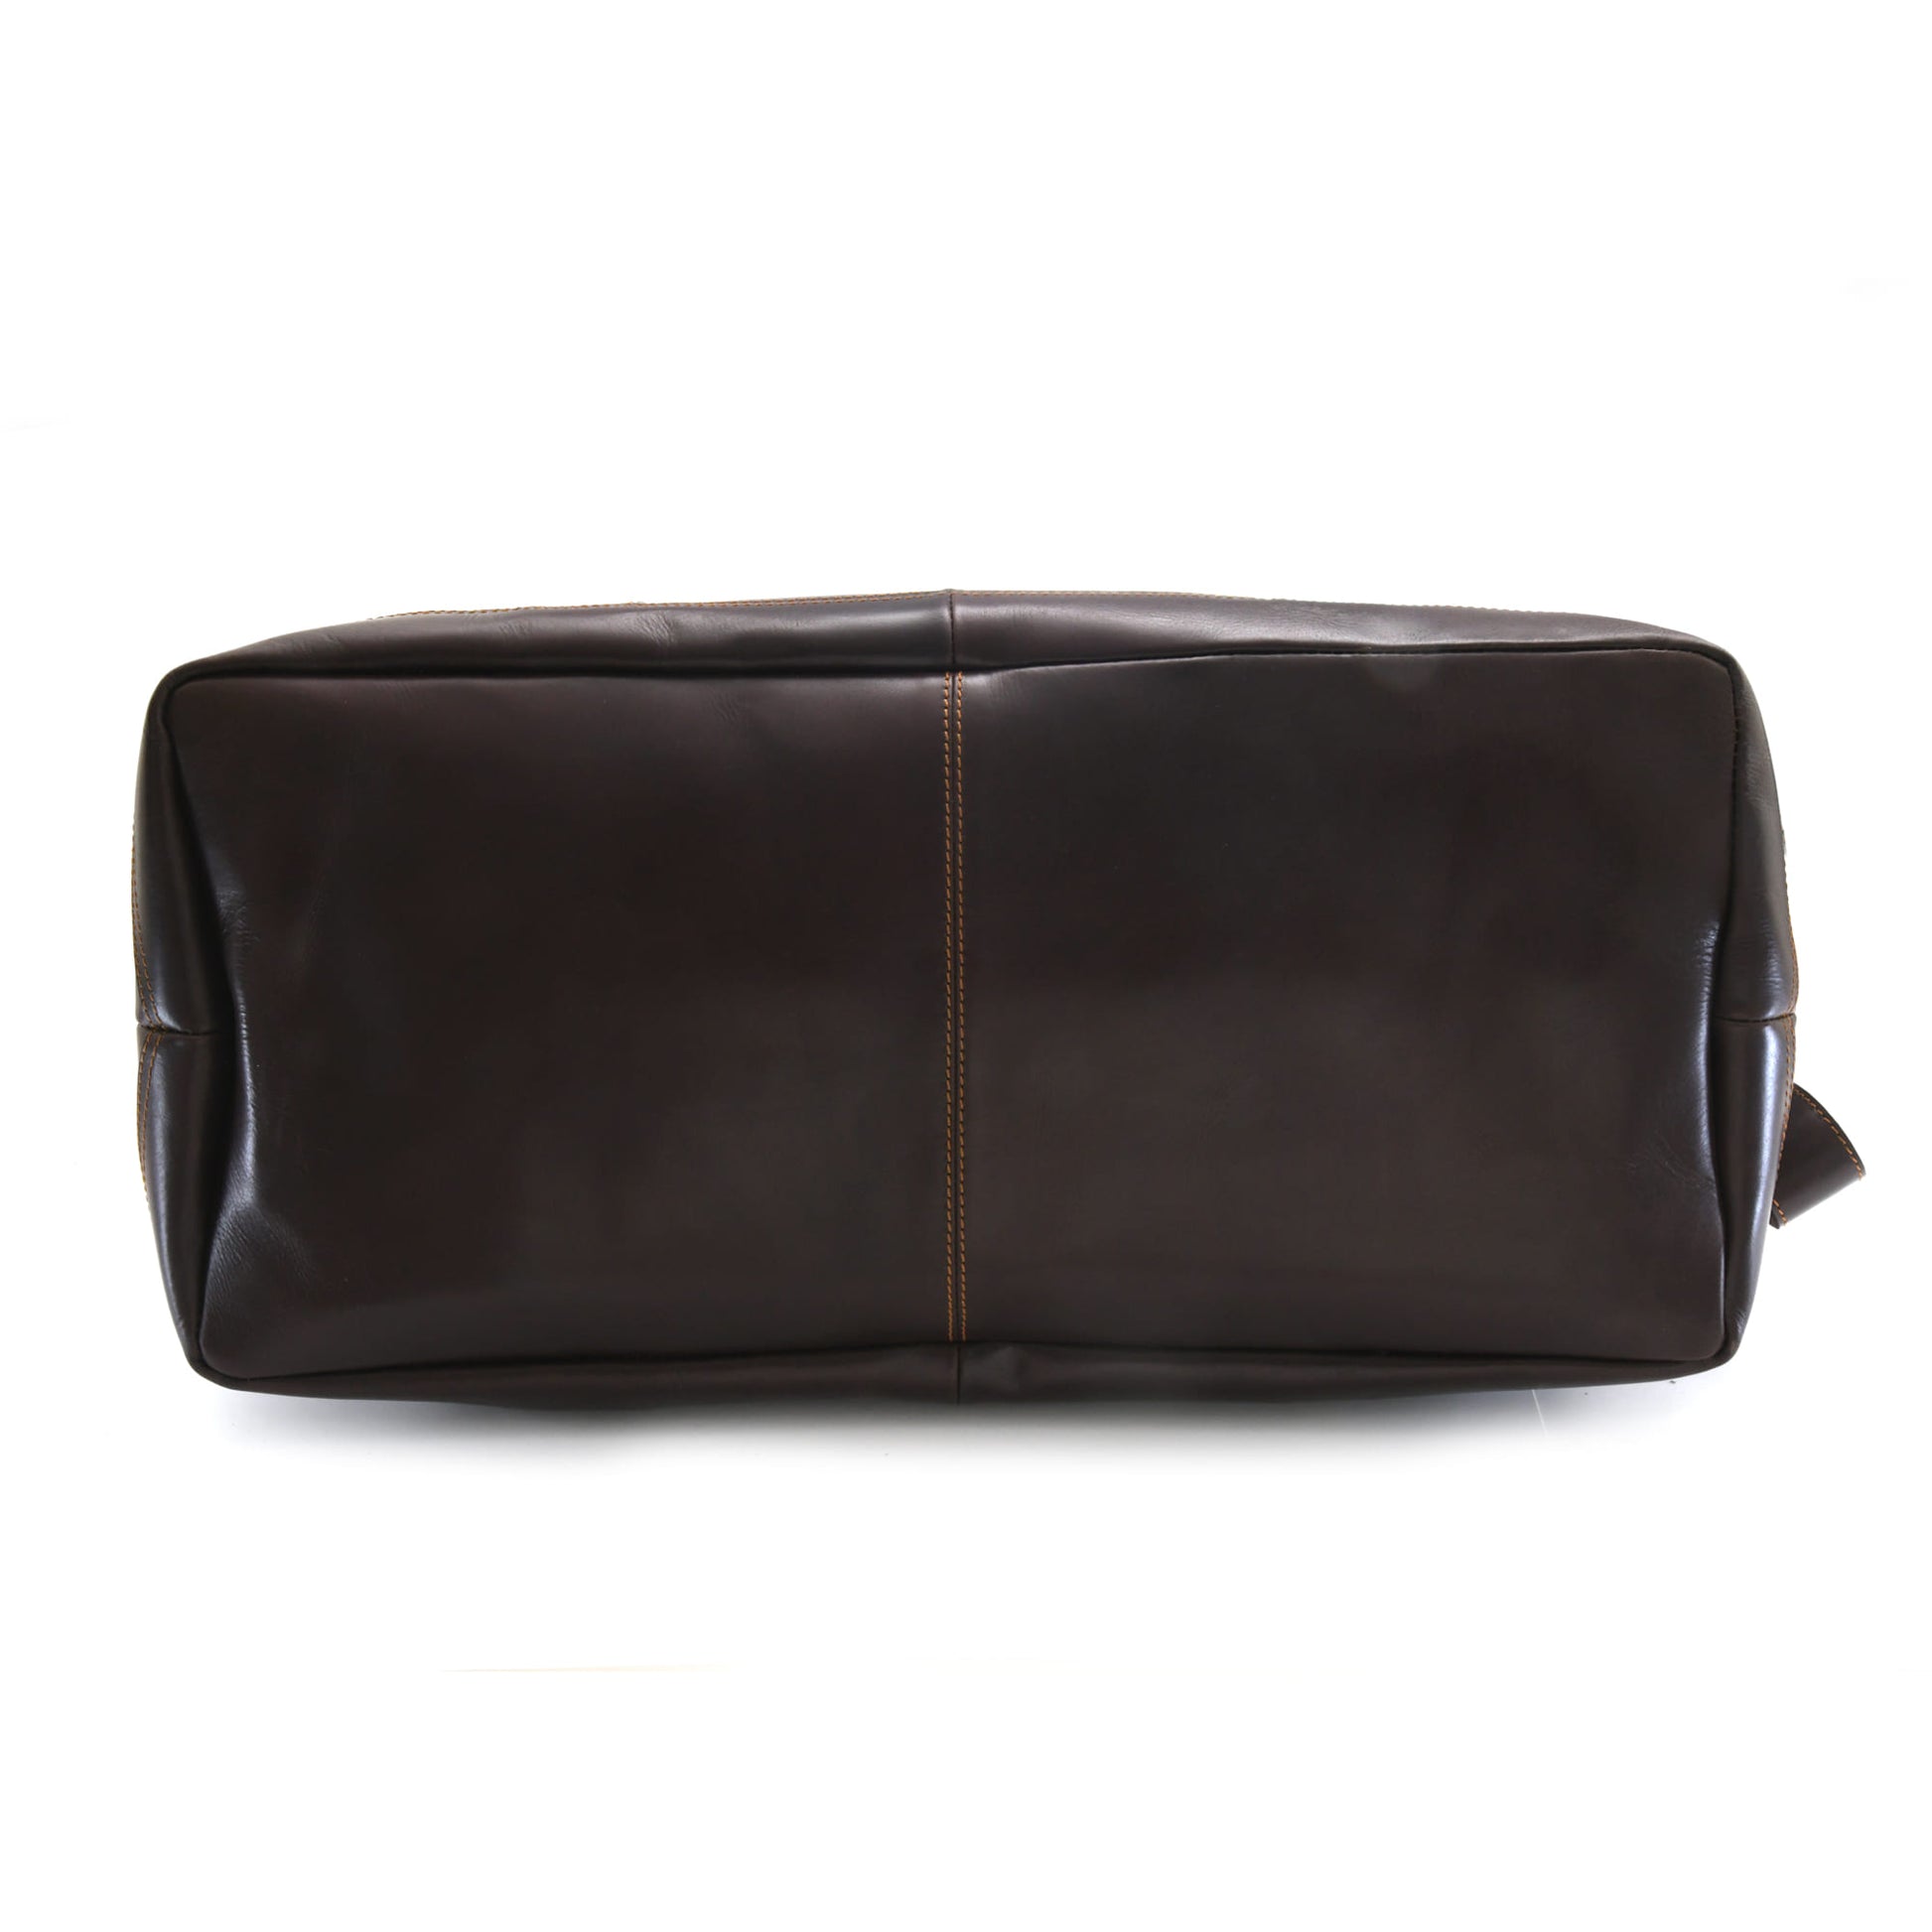 Style n Craft 392100 Large Duffle Bag in Full Grain Dark Brown Leather - Bottom View